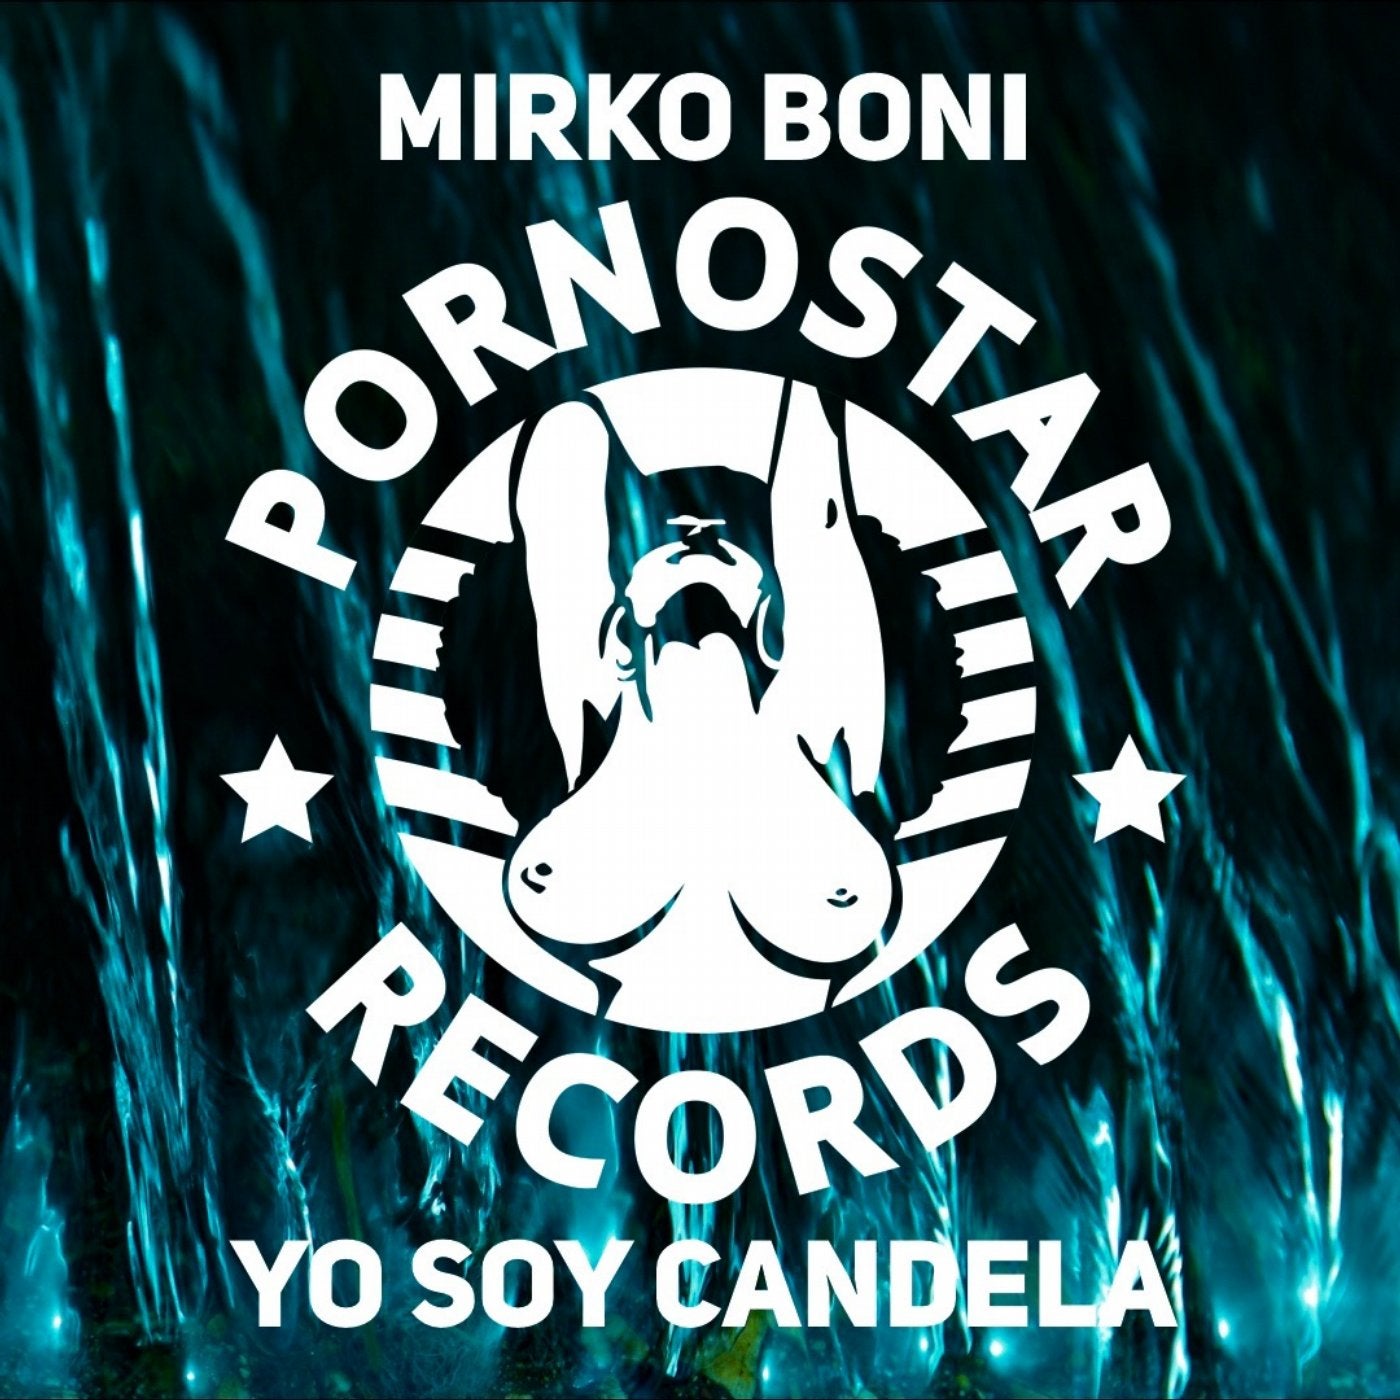 Charts with Yo Soy Candela (Original Mix) от Mirko Boni на Beatport.